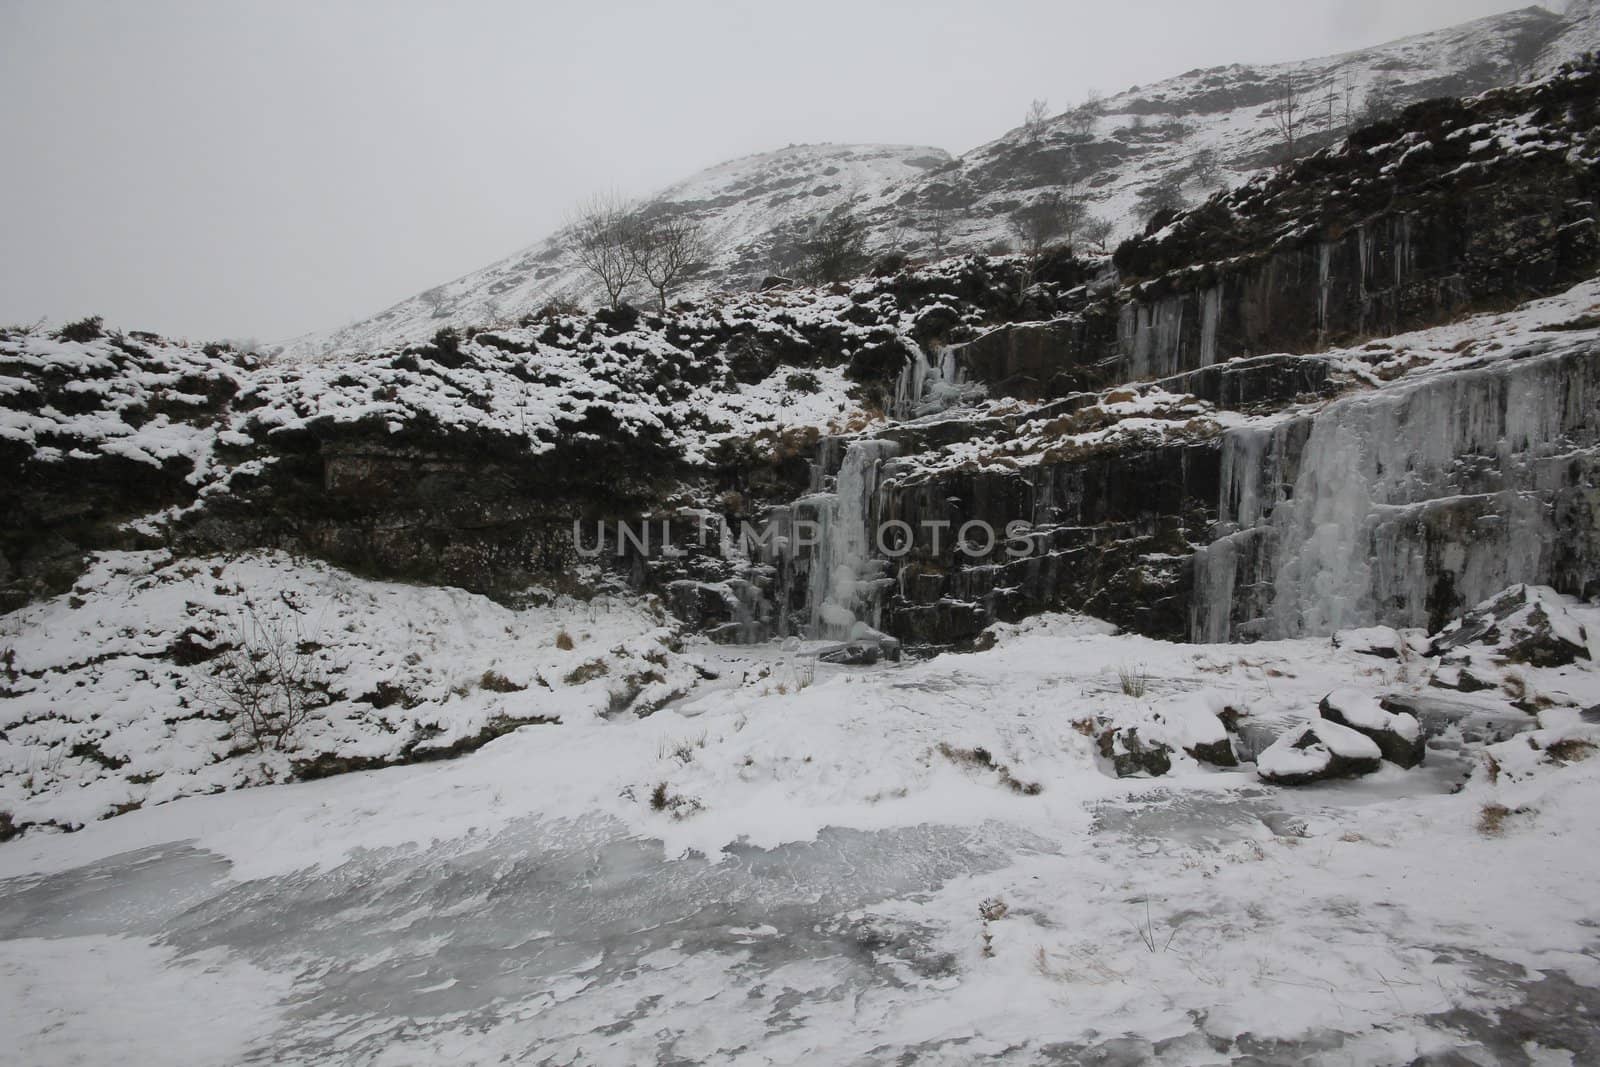 Snowey frozen waterfall in Wales at Christmas